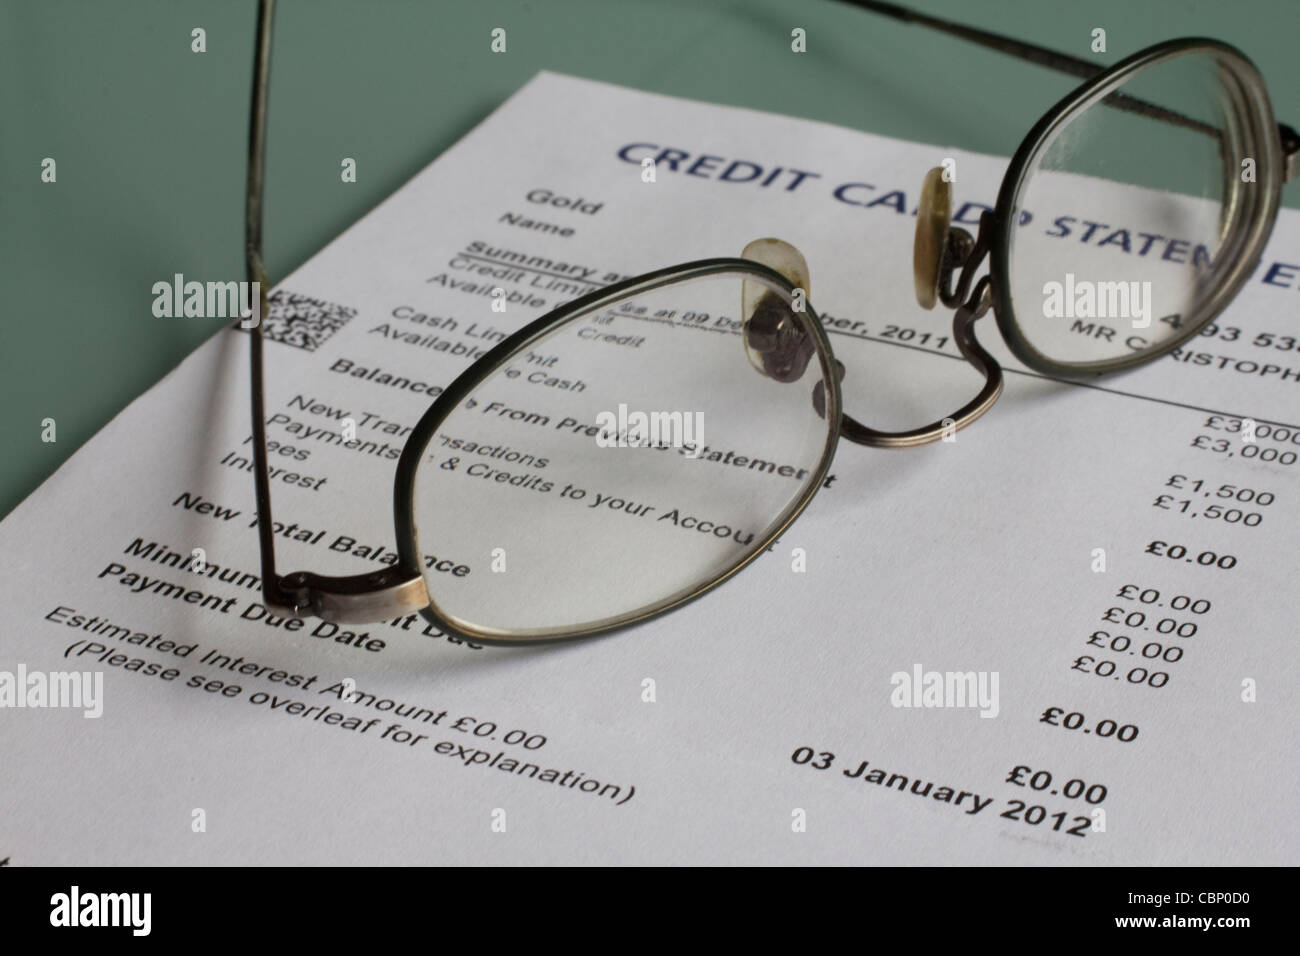 zero credit card payment statement, Stock Photo